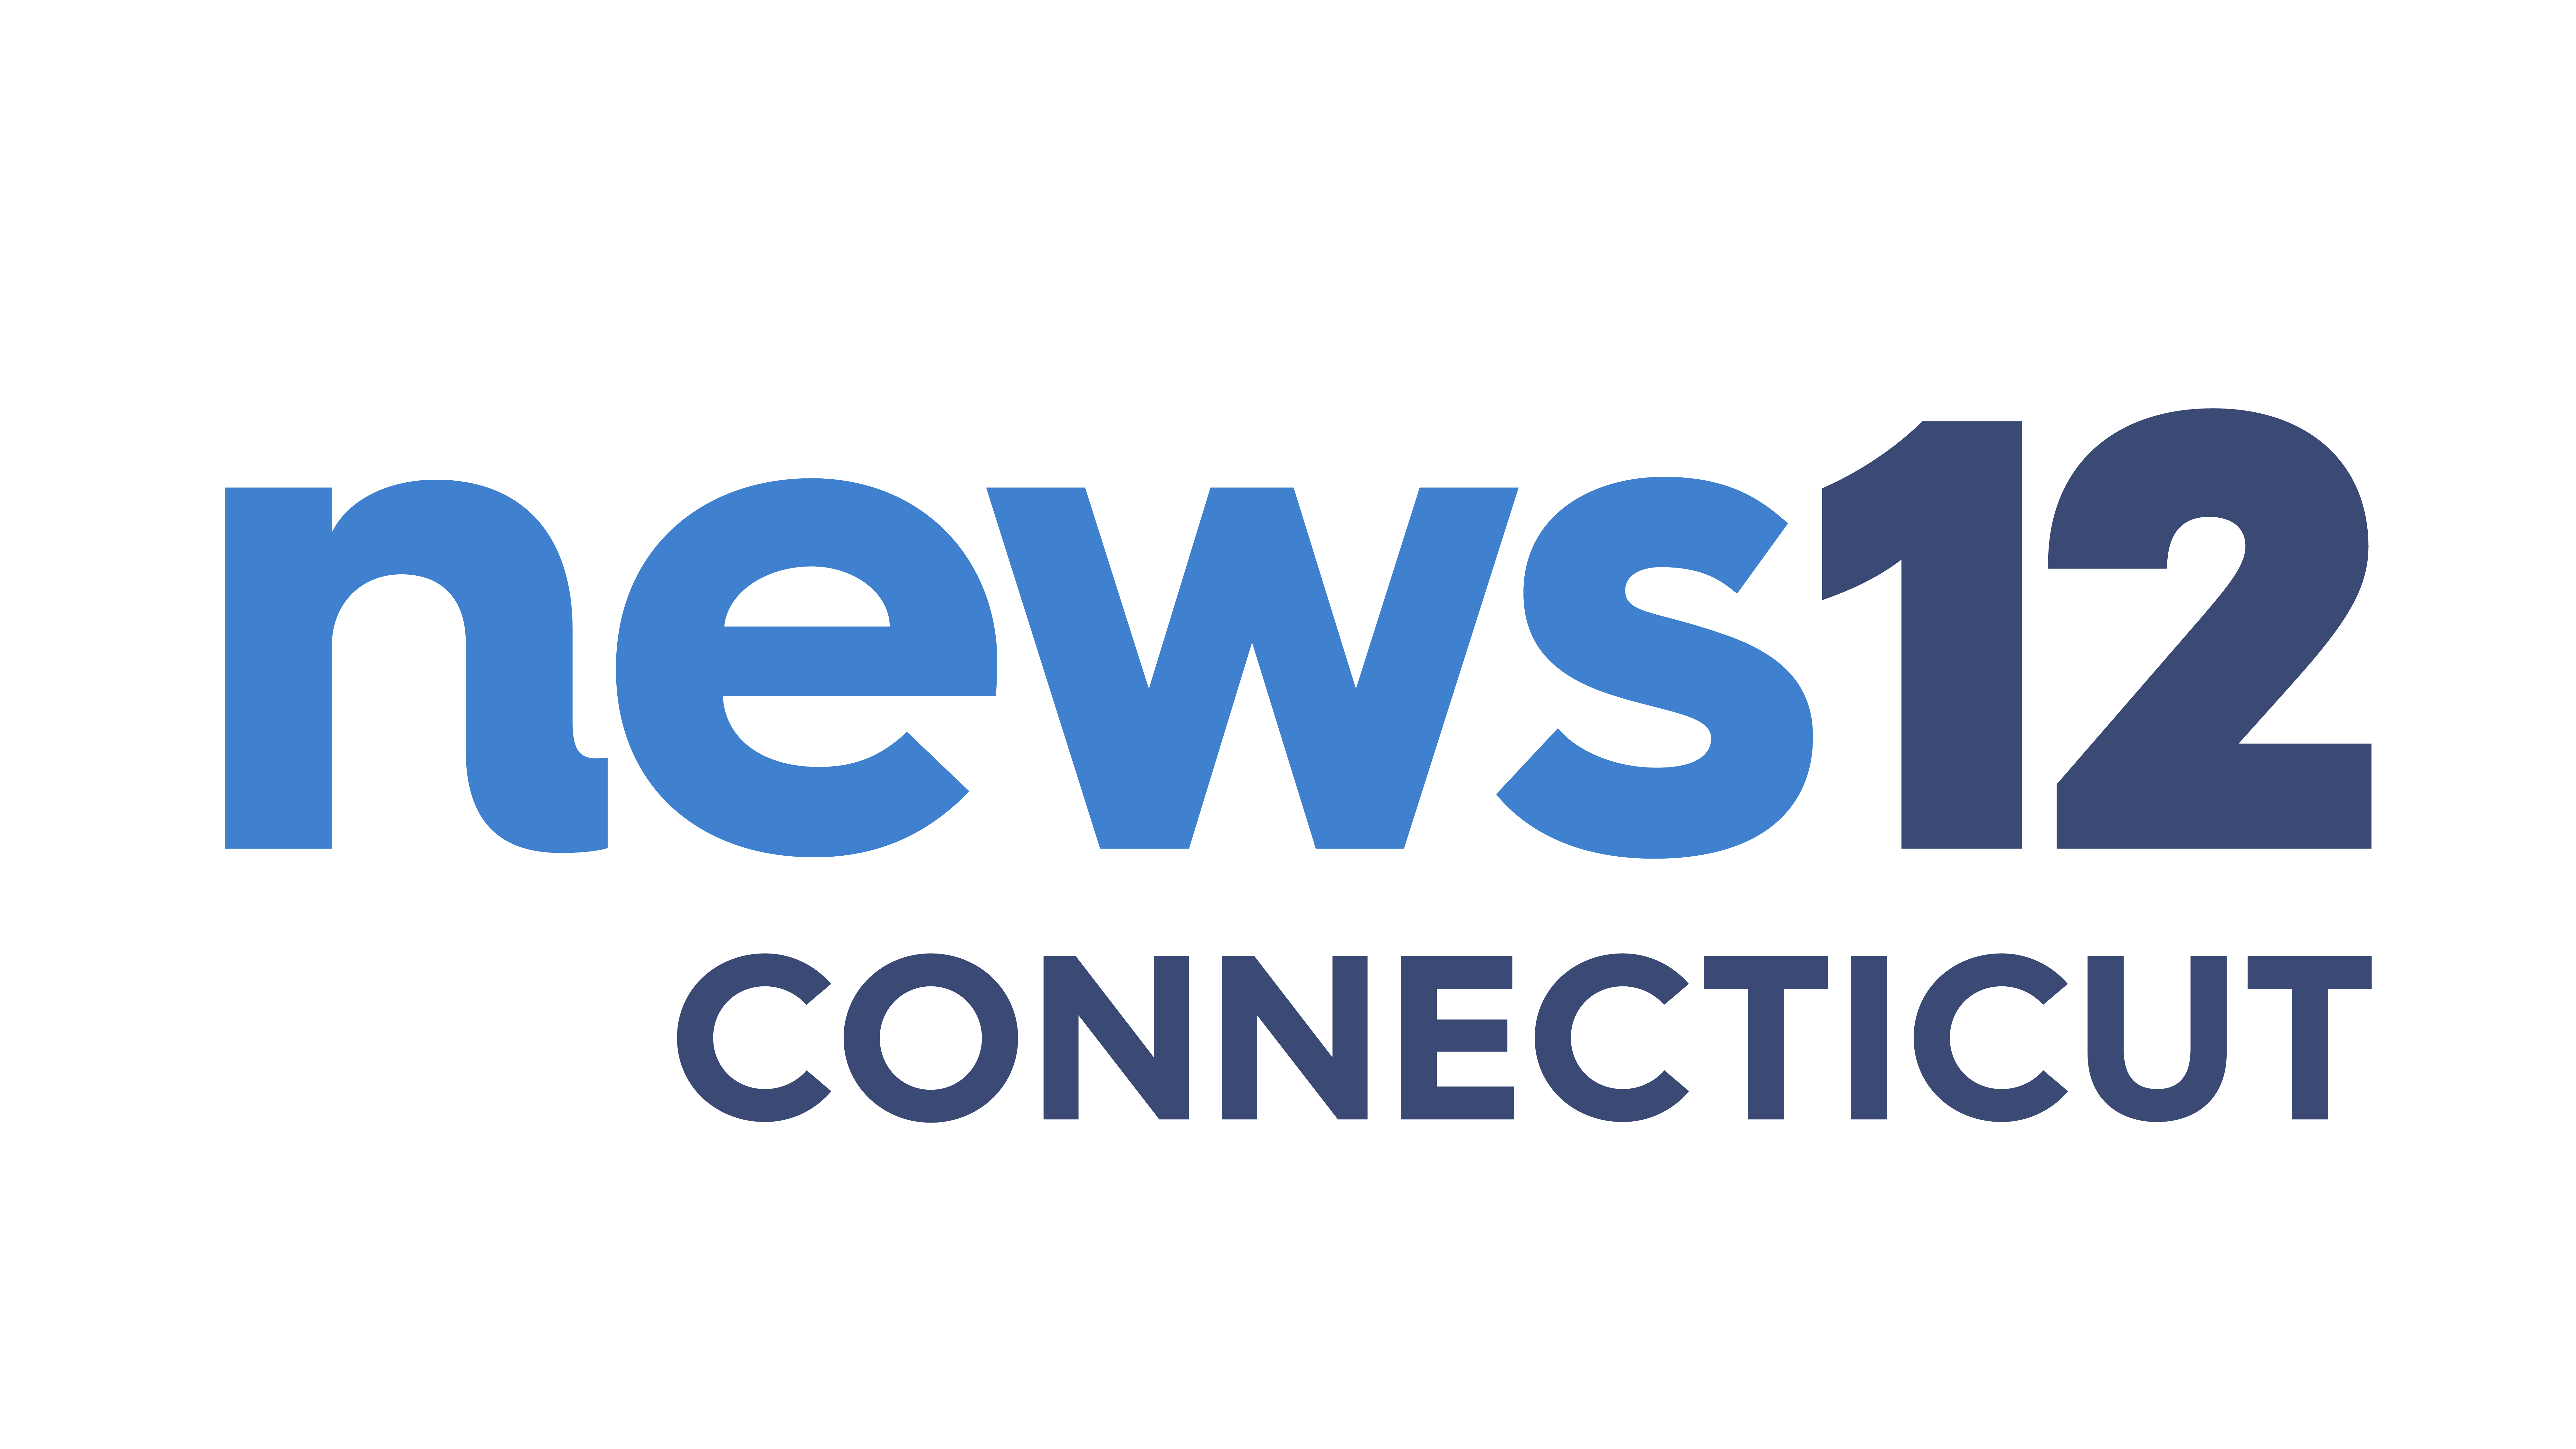 News Connecticut 12